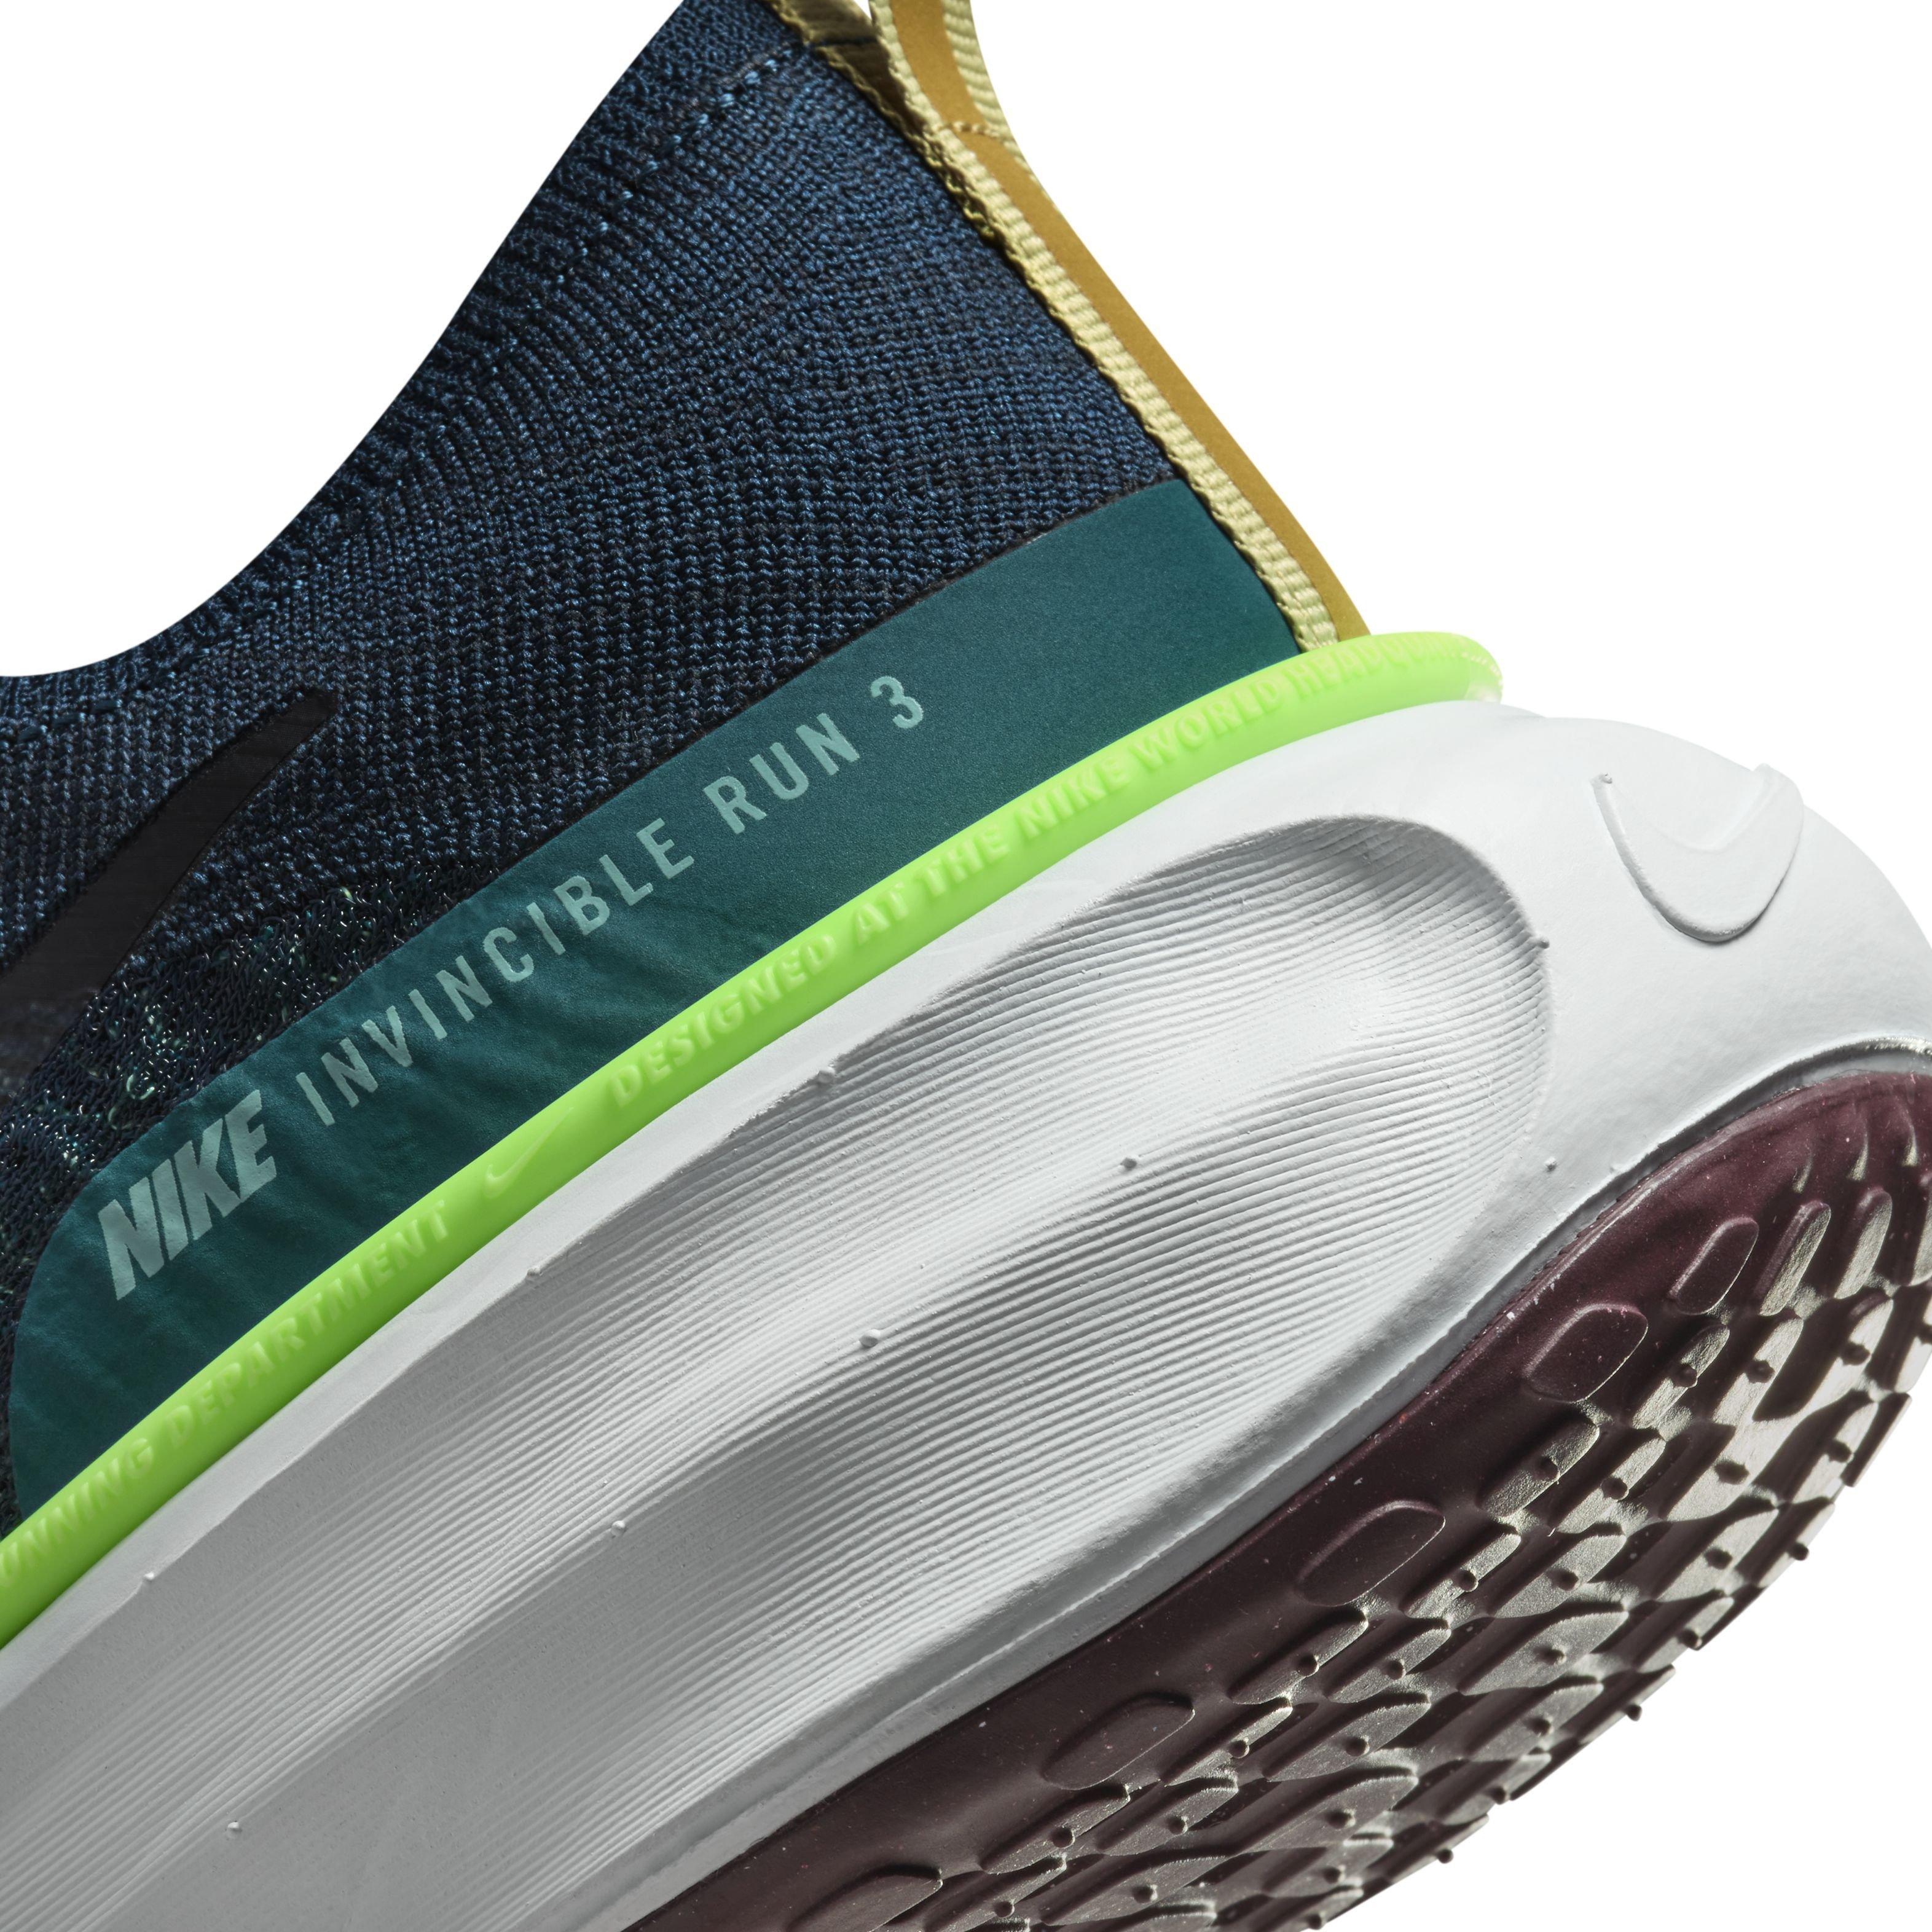 Nike Invincible Run 3 Noise Aqua/Green Abyss/Blue Lightning Men's Running  Shoe - Hibbett